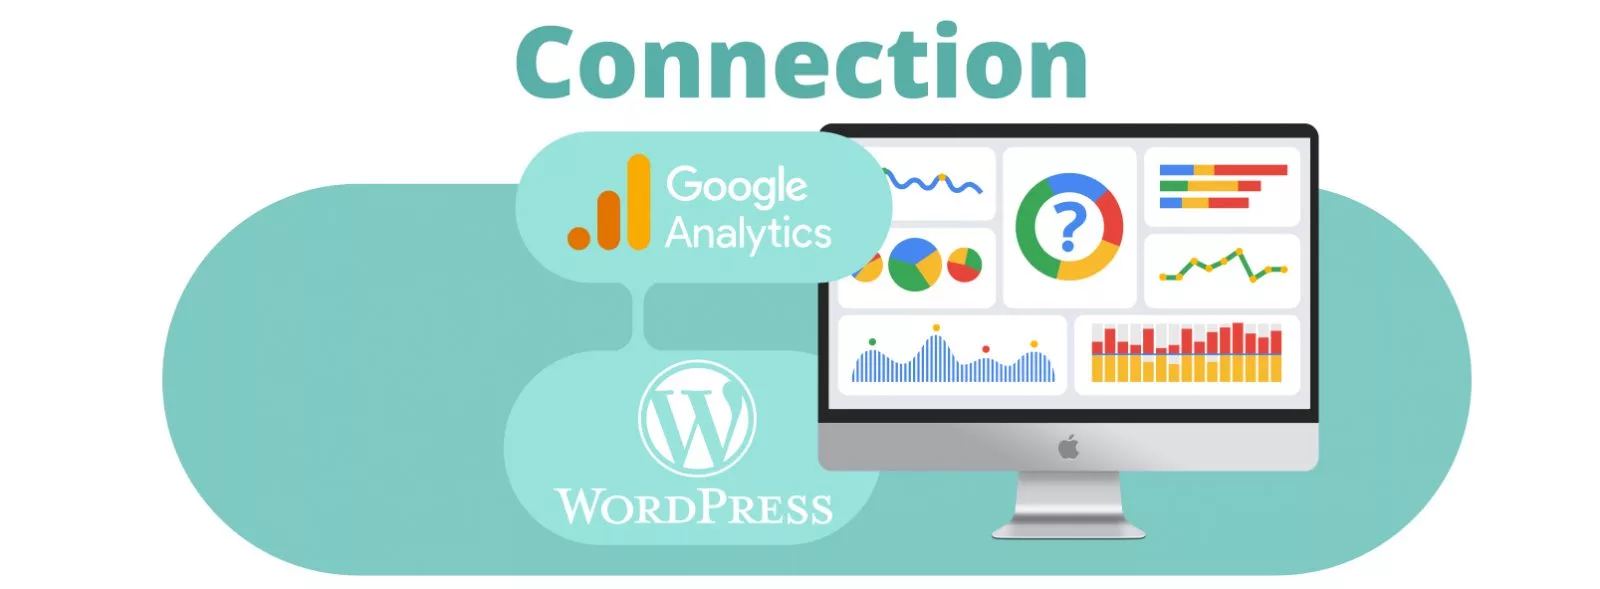 How to Connect Google Analytics to WordPress